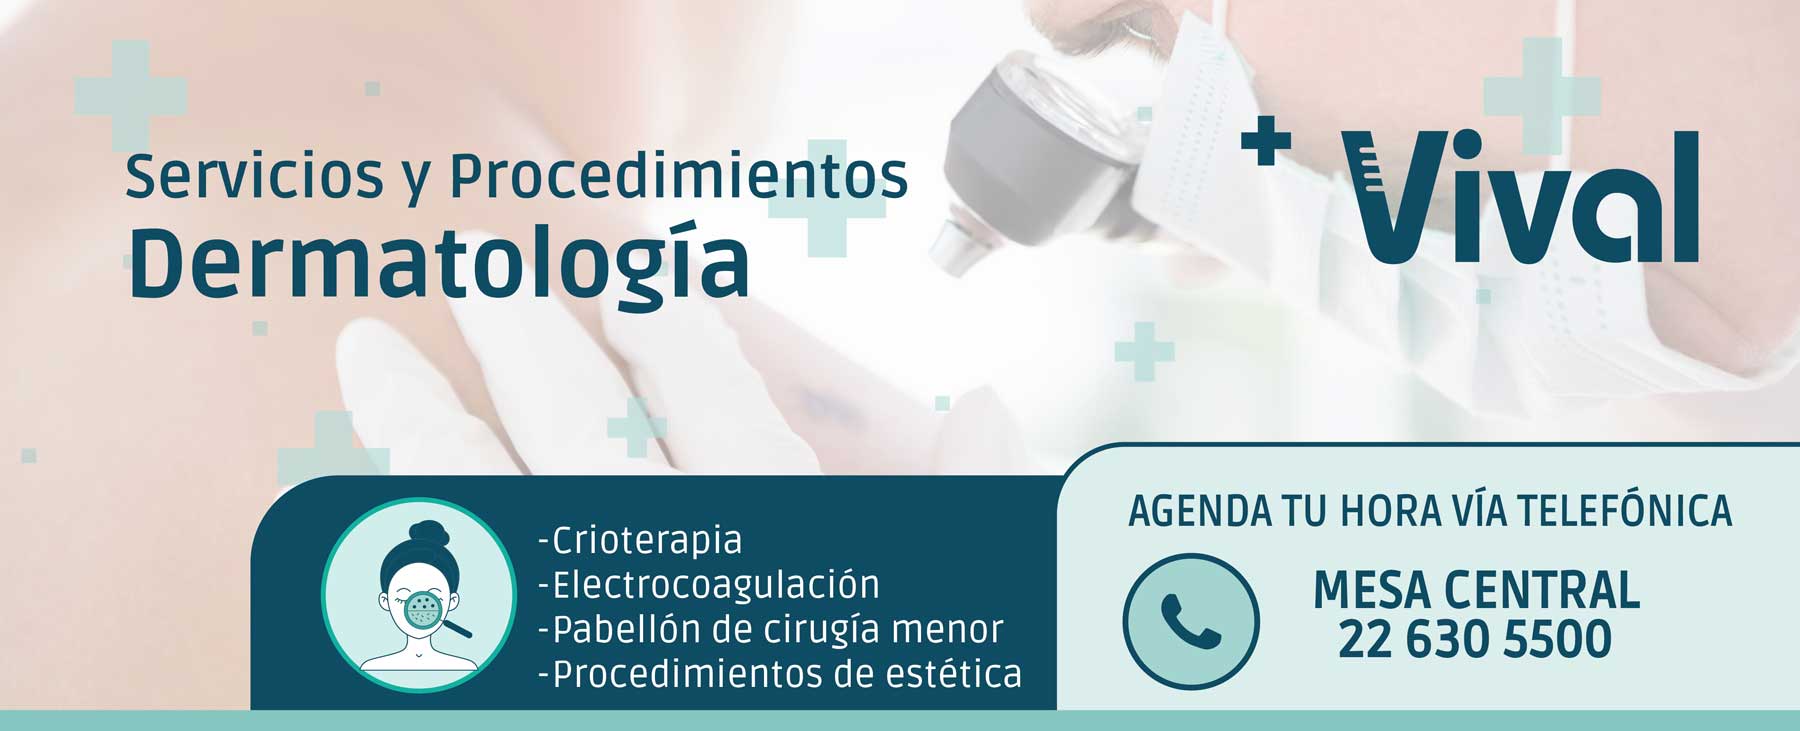 banner-proced-dermatologia